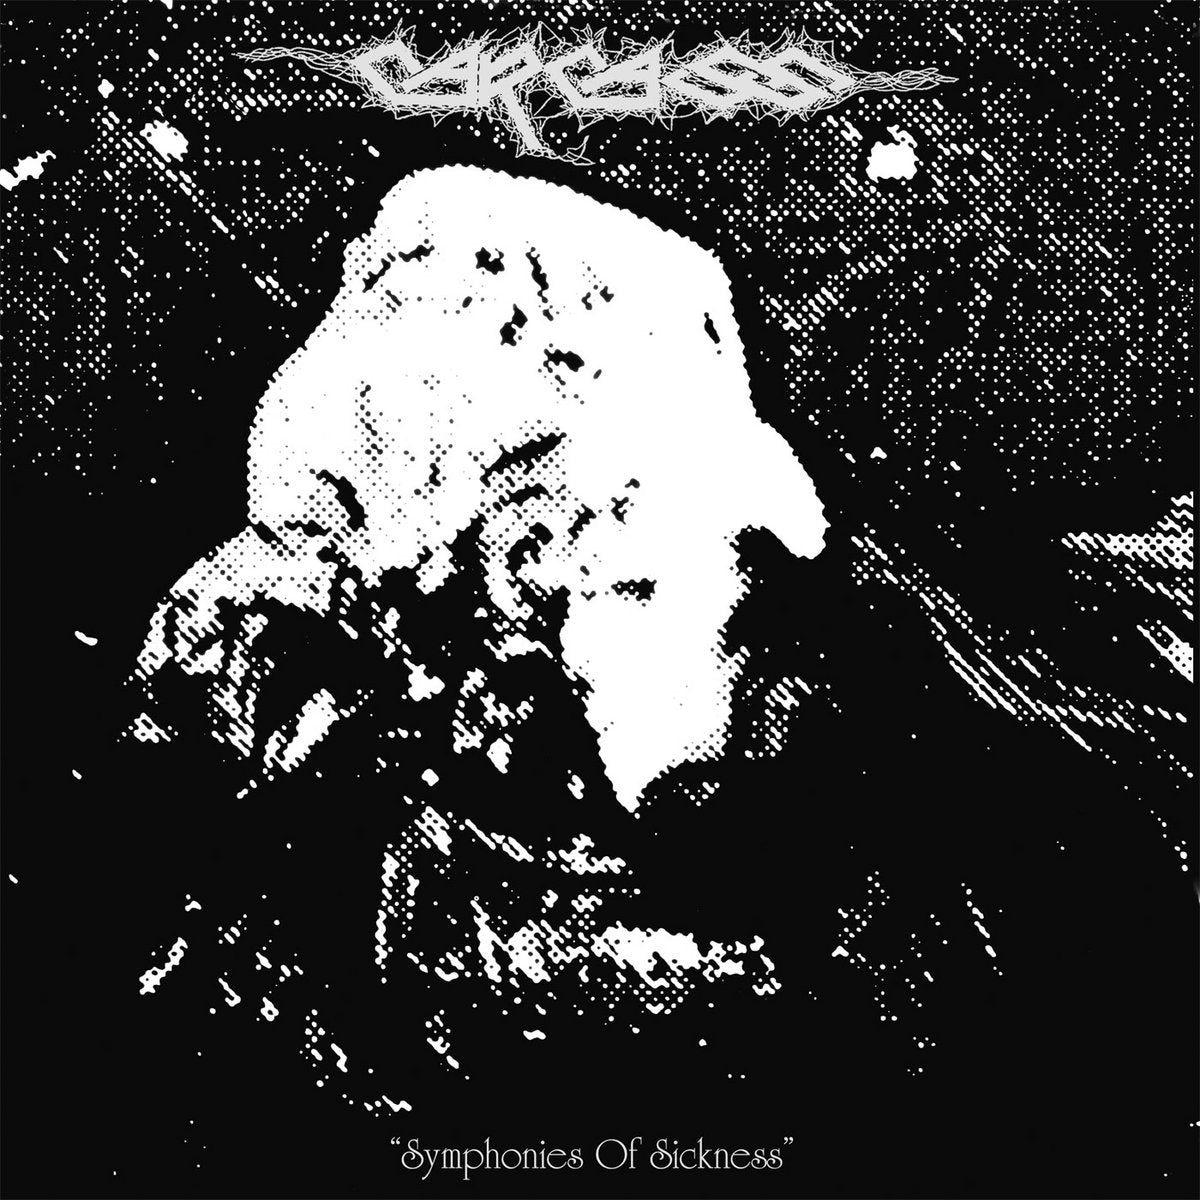 Carcass "Symphonies Of Sickness" Digital Download